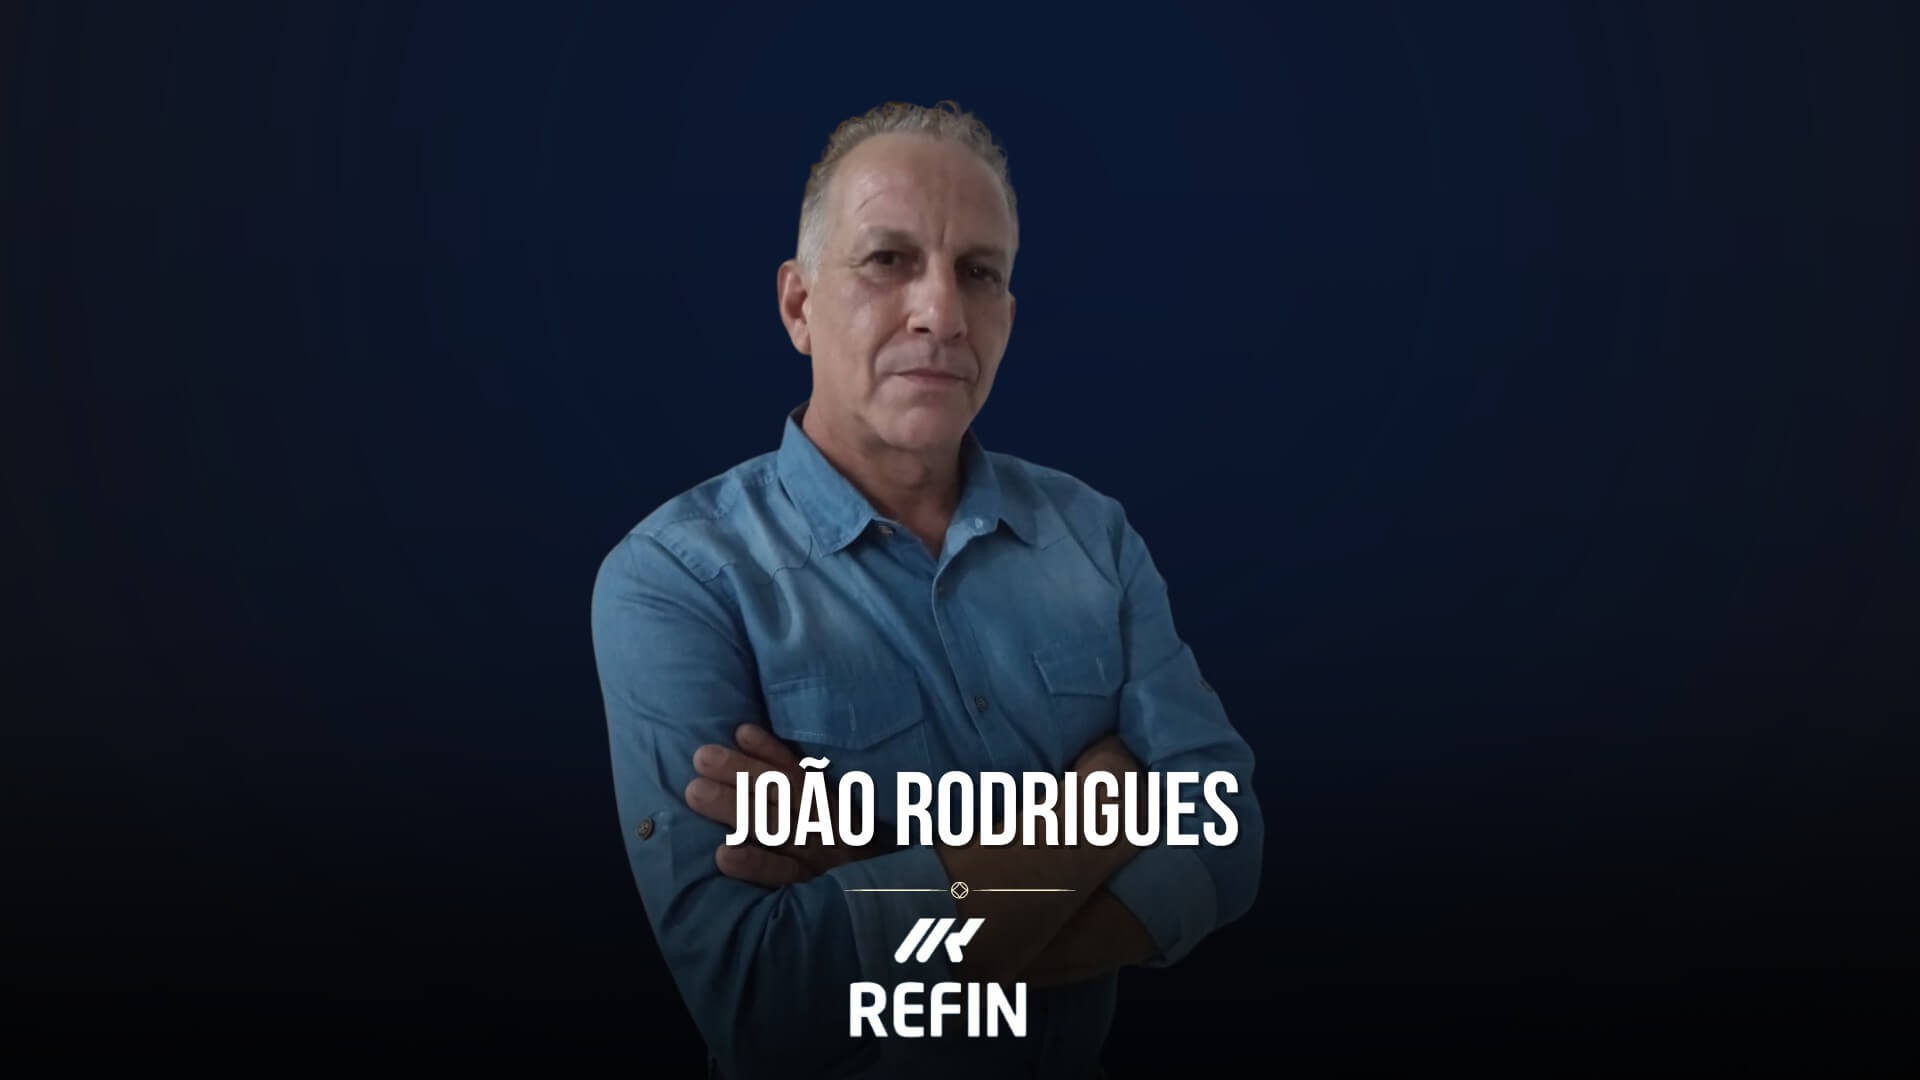 JOÃO RODRIGUES